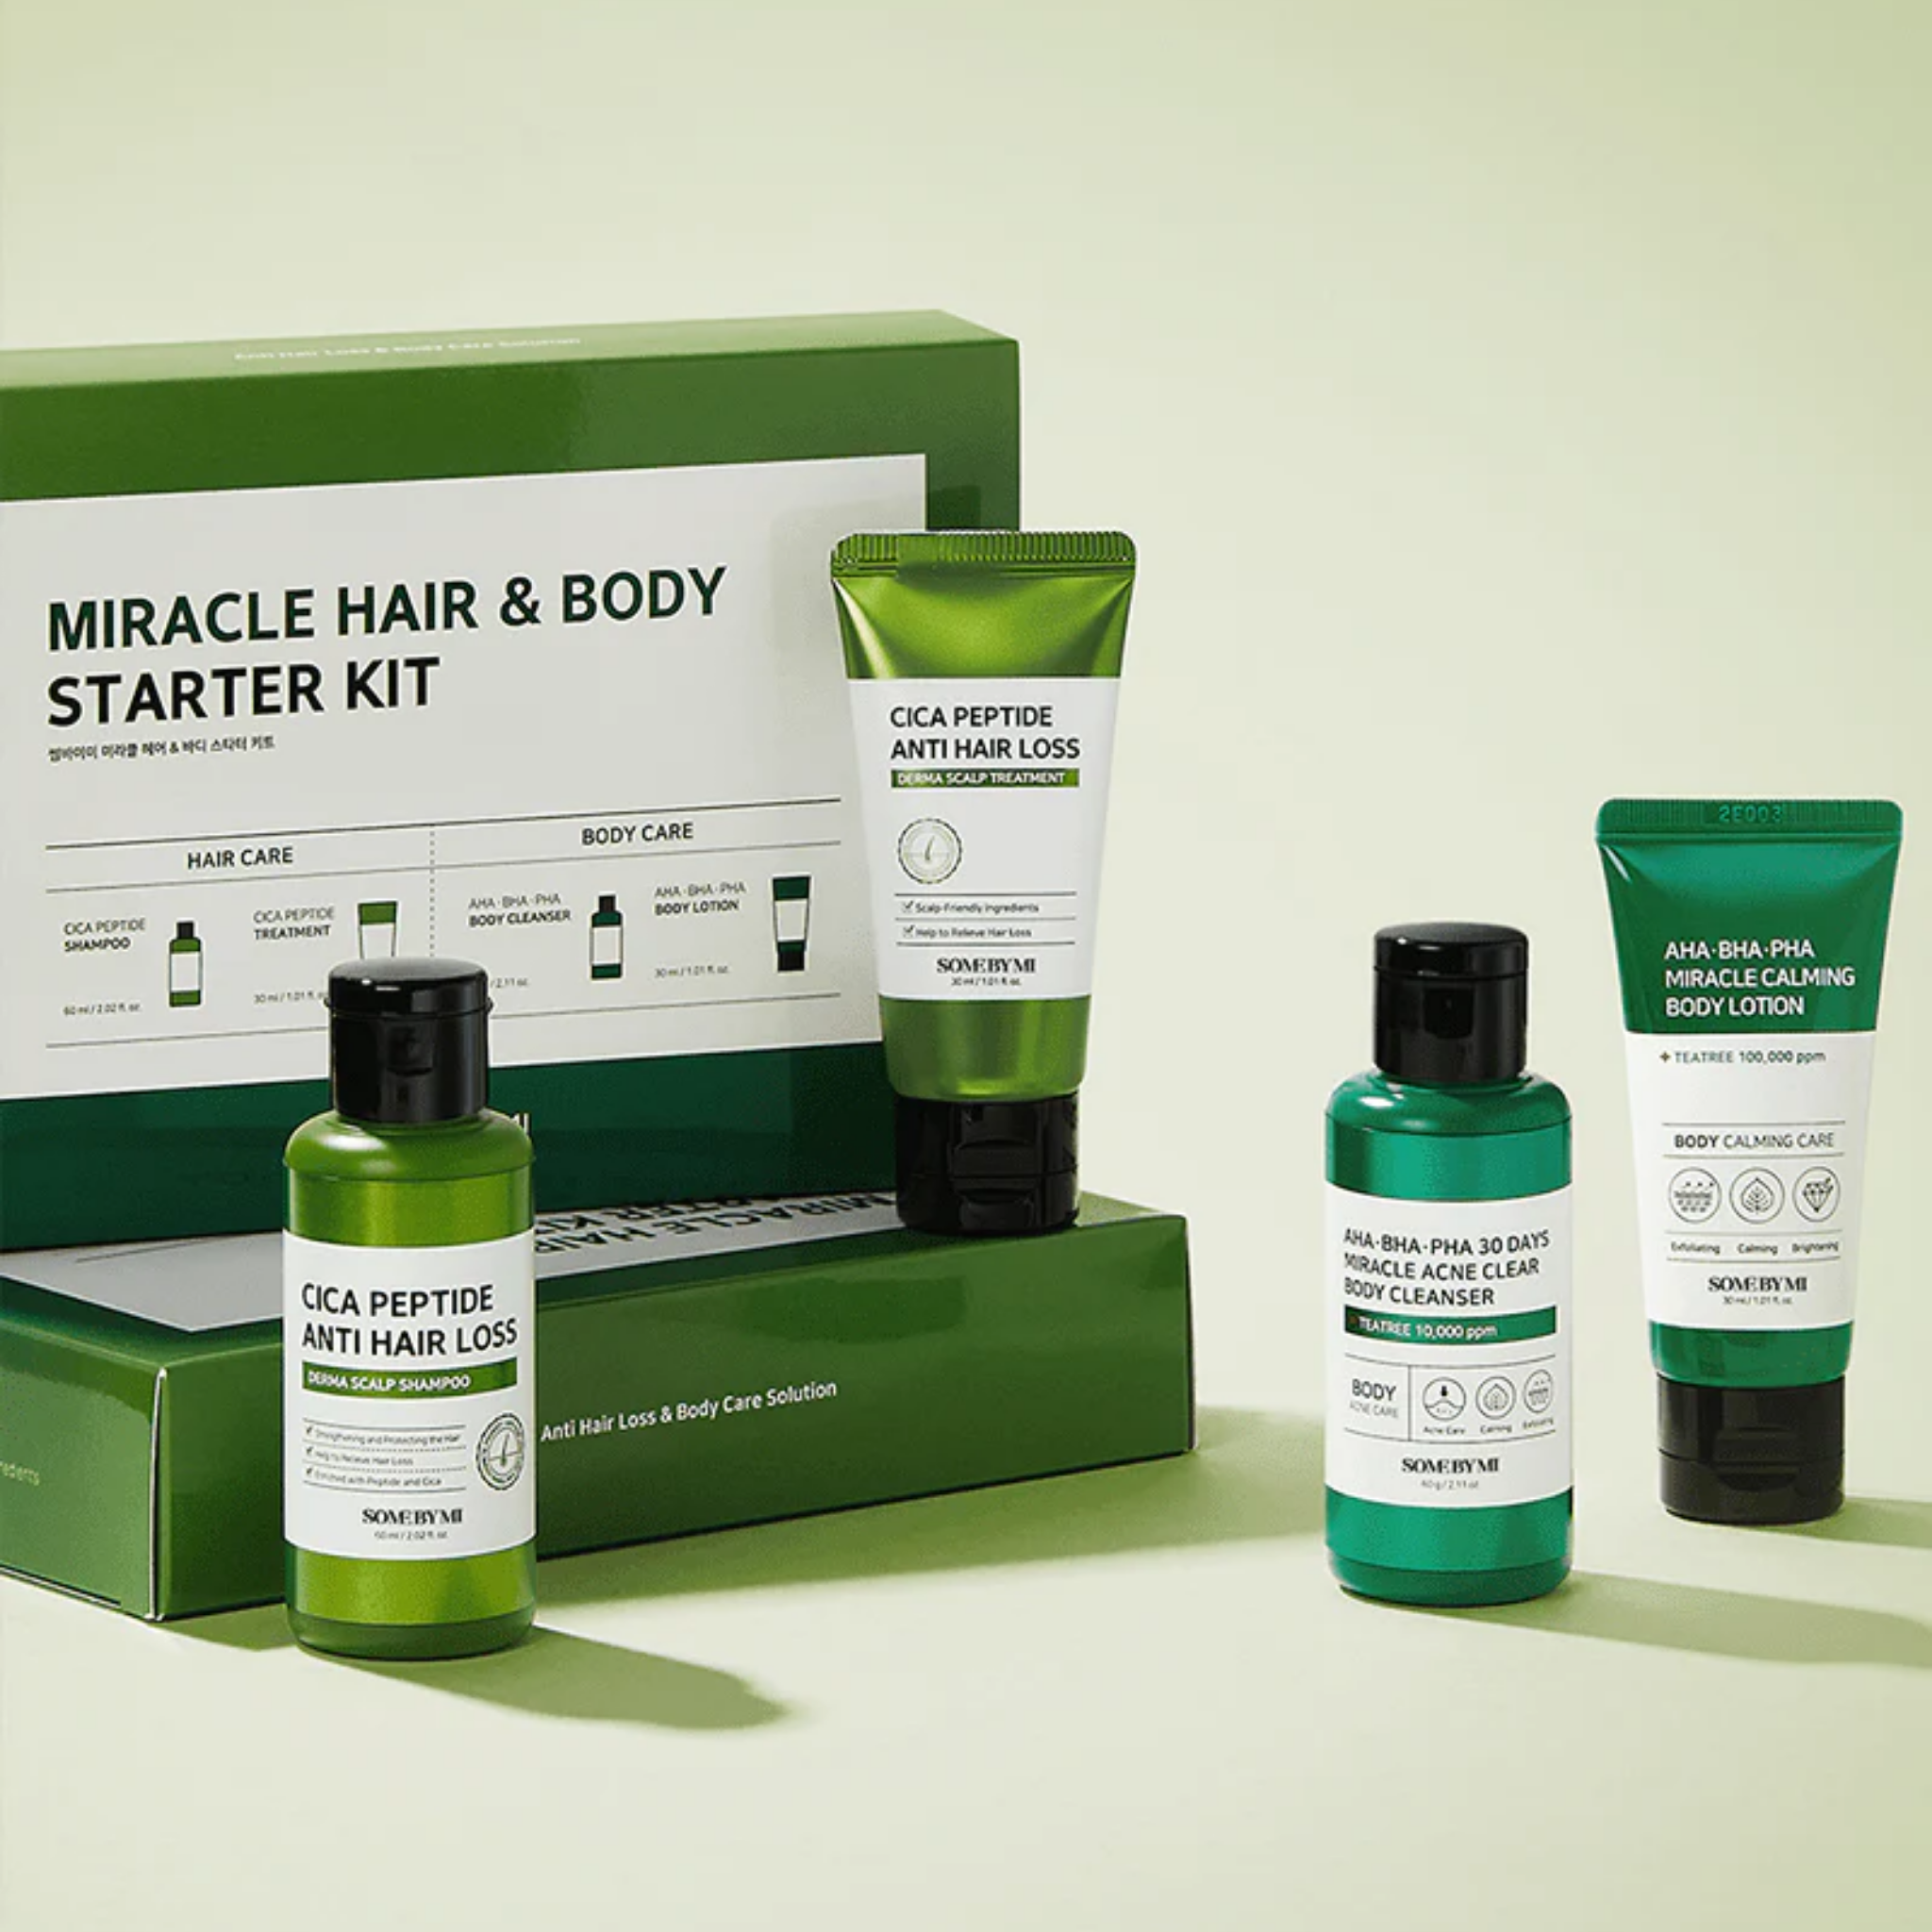 SOME BY MI AHA-BHA-PHA 30 Days Miracle Starter Kit (4 items) – Skin Cupid